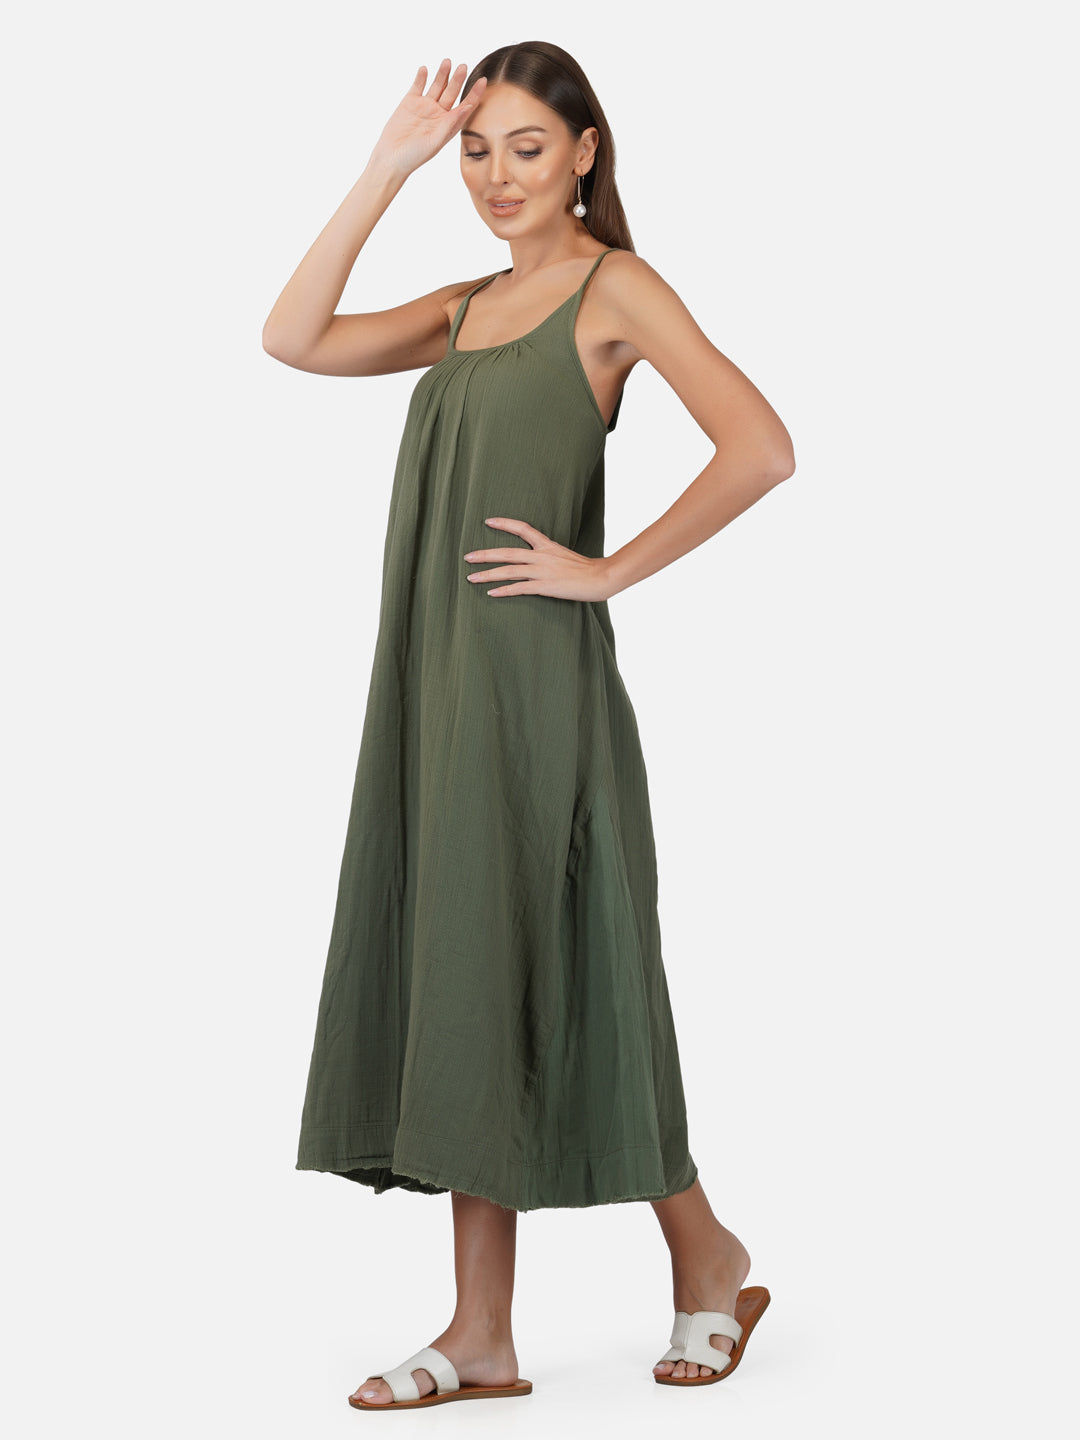 Porsorte Womens Cotton Gauze Olive Green Casual Strappy Dress